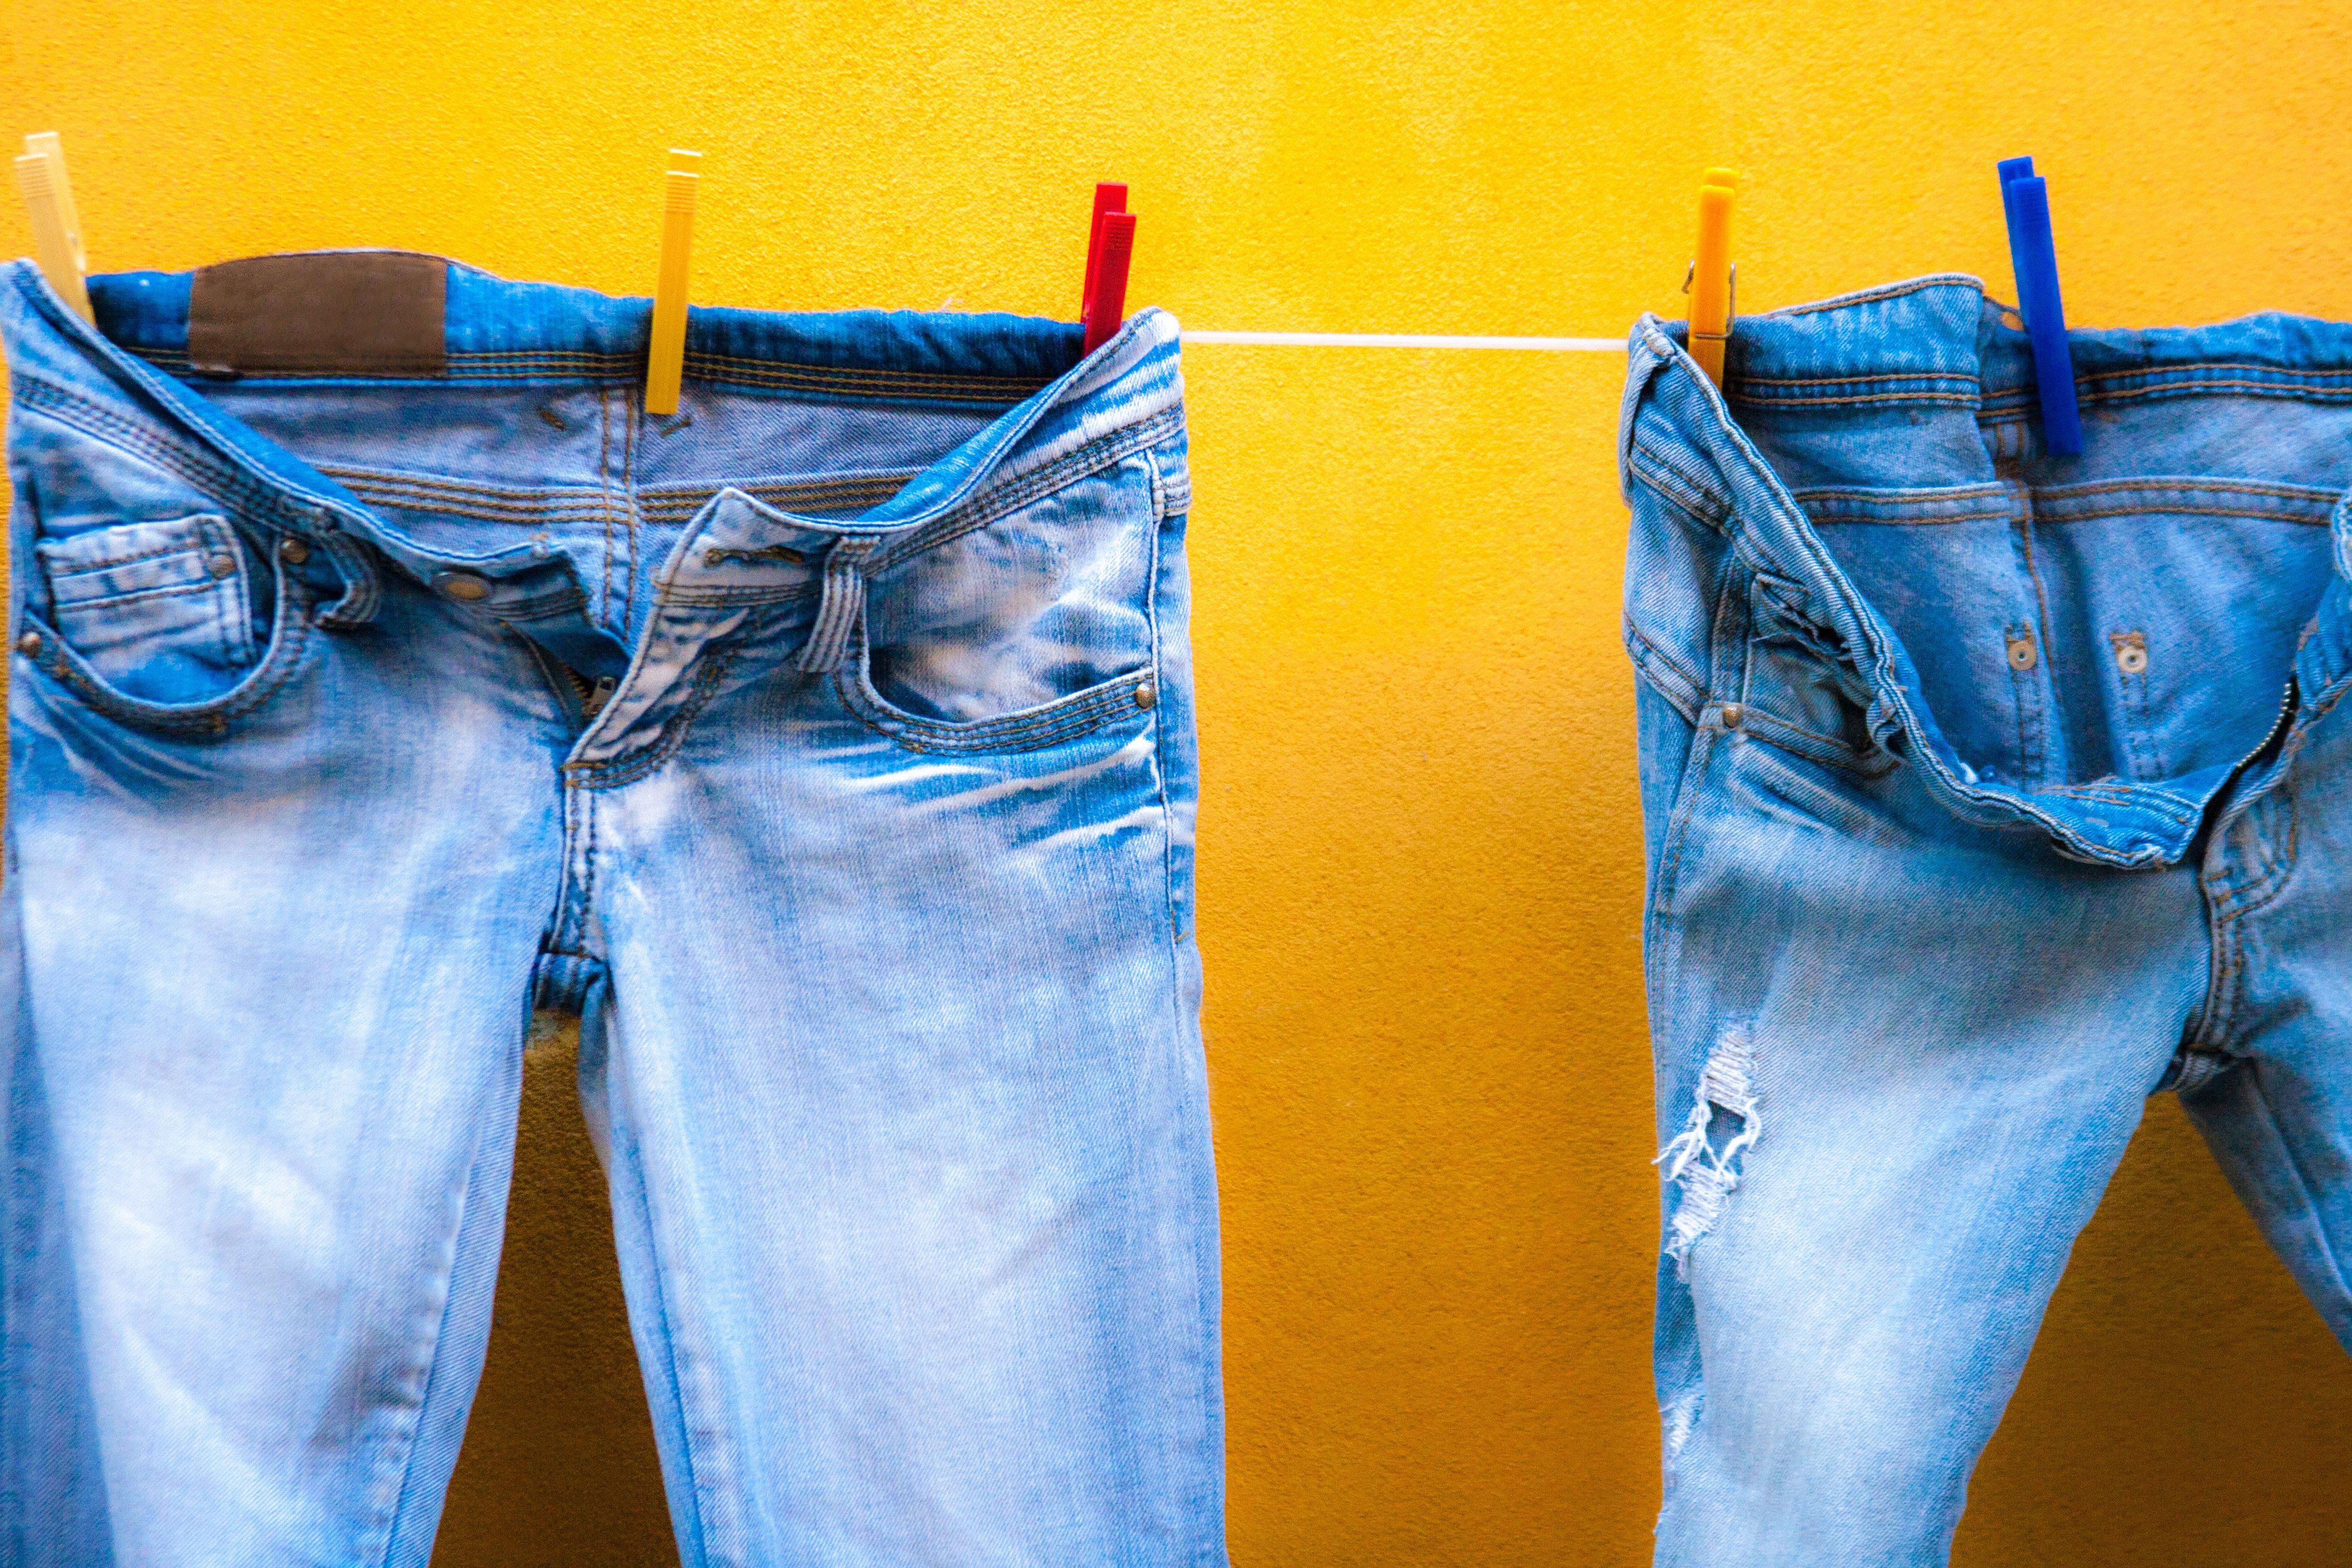 Jeans-Fehler: Falte am Reißverschluss